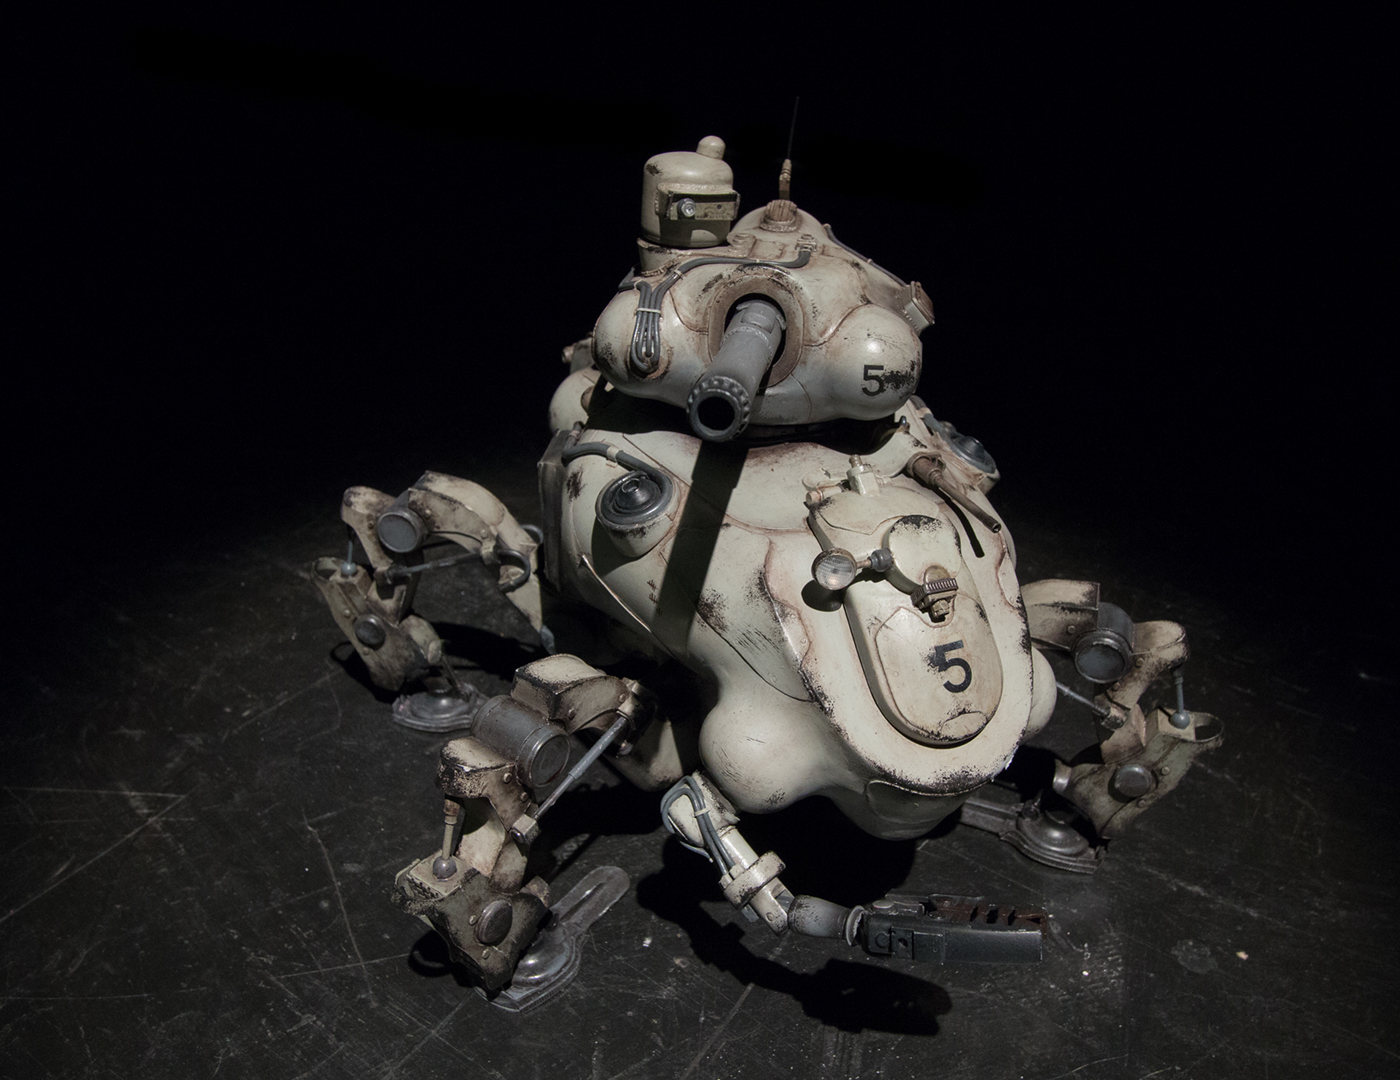 robot spider armadeira reciclagem recycling Miniature scale model kit bash Scratchbuild